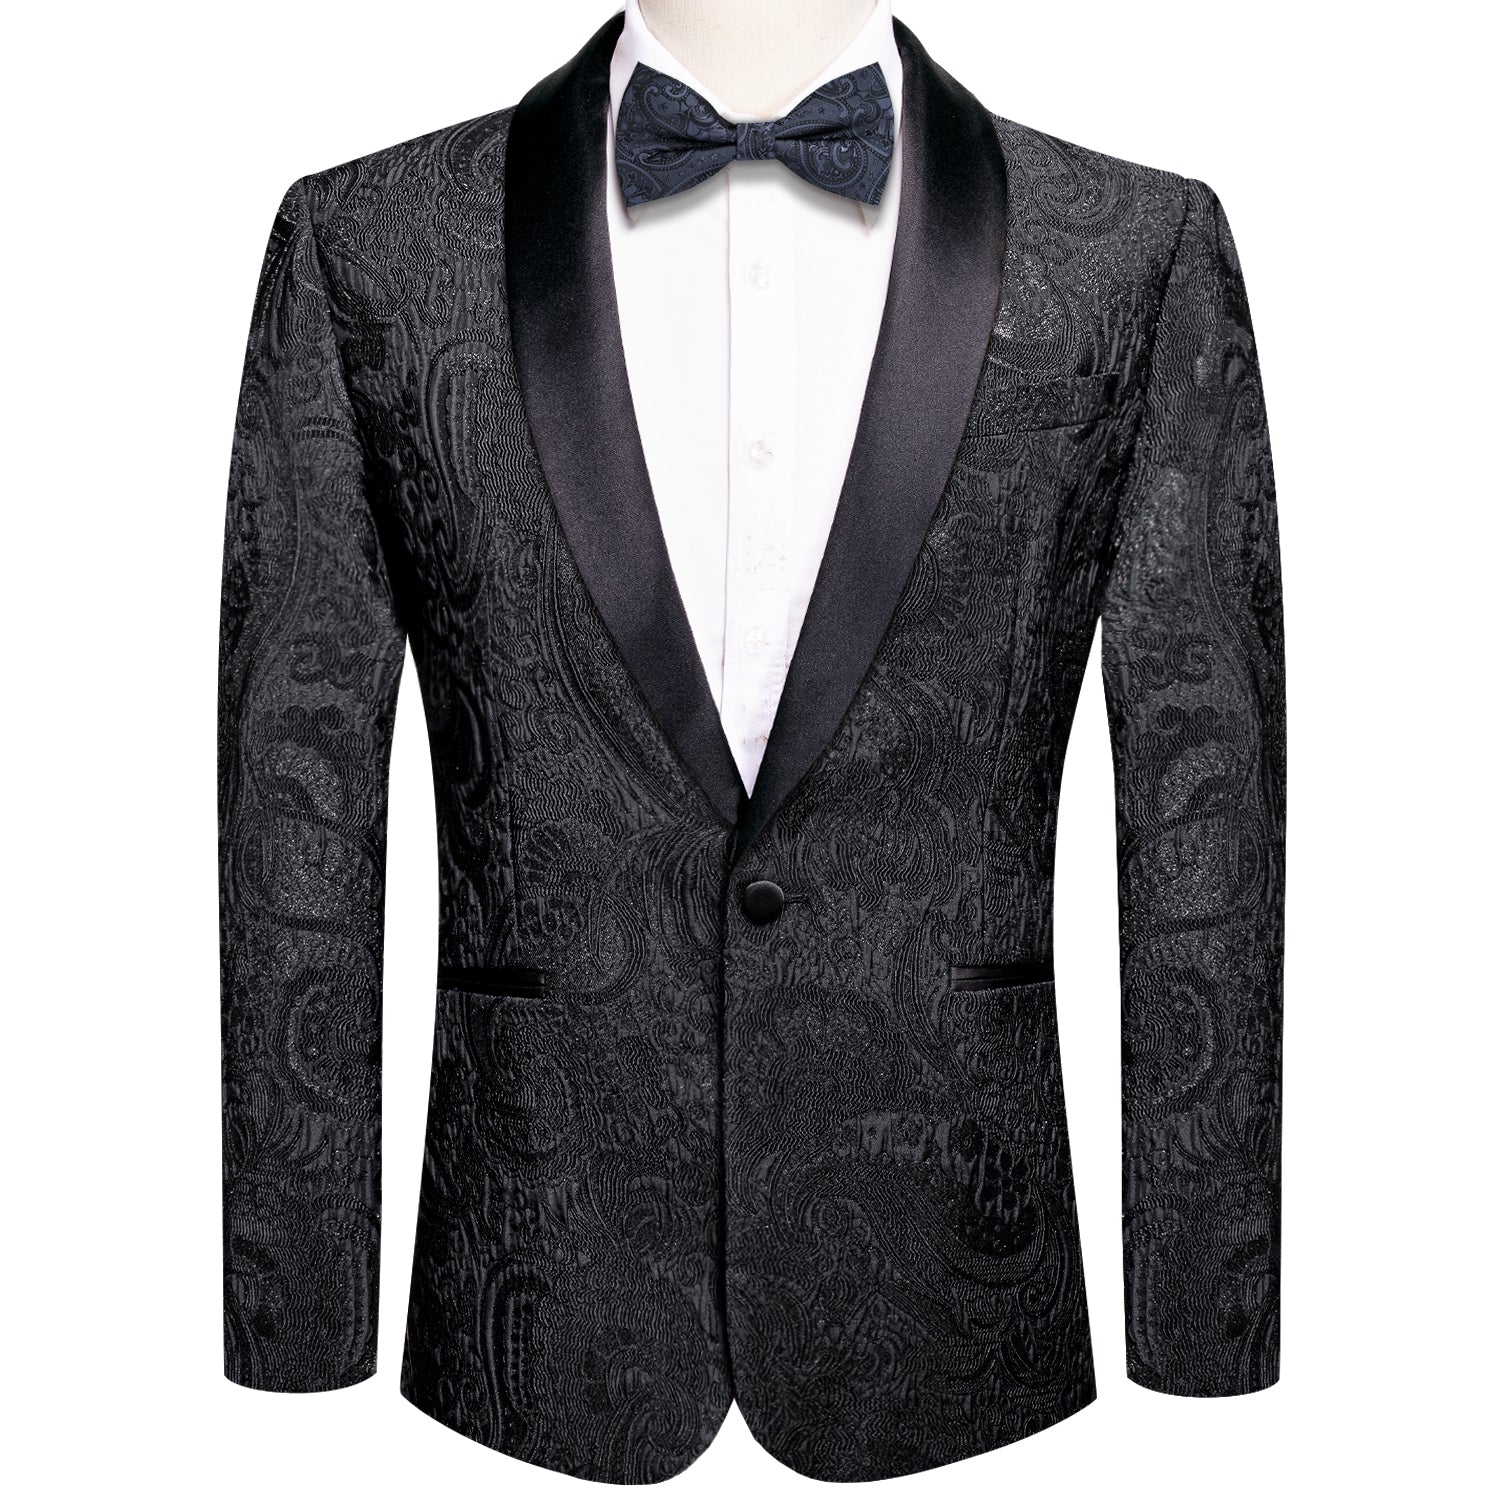 Hi-Tie Luxury Black Paisley Men's Suit Set